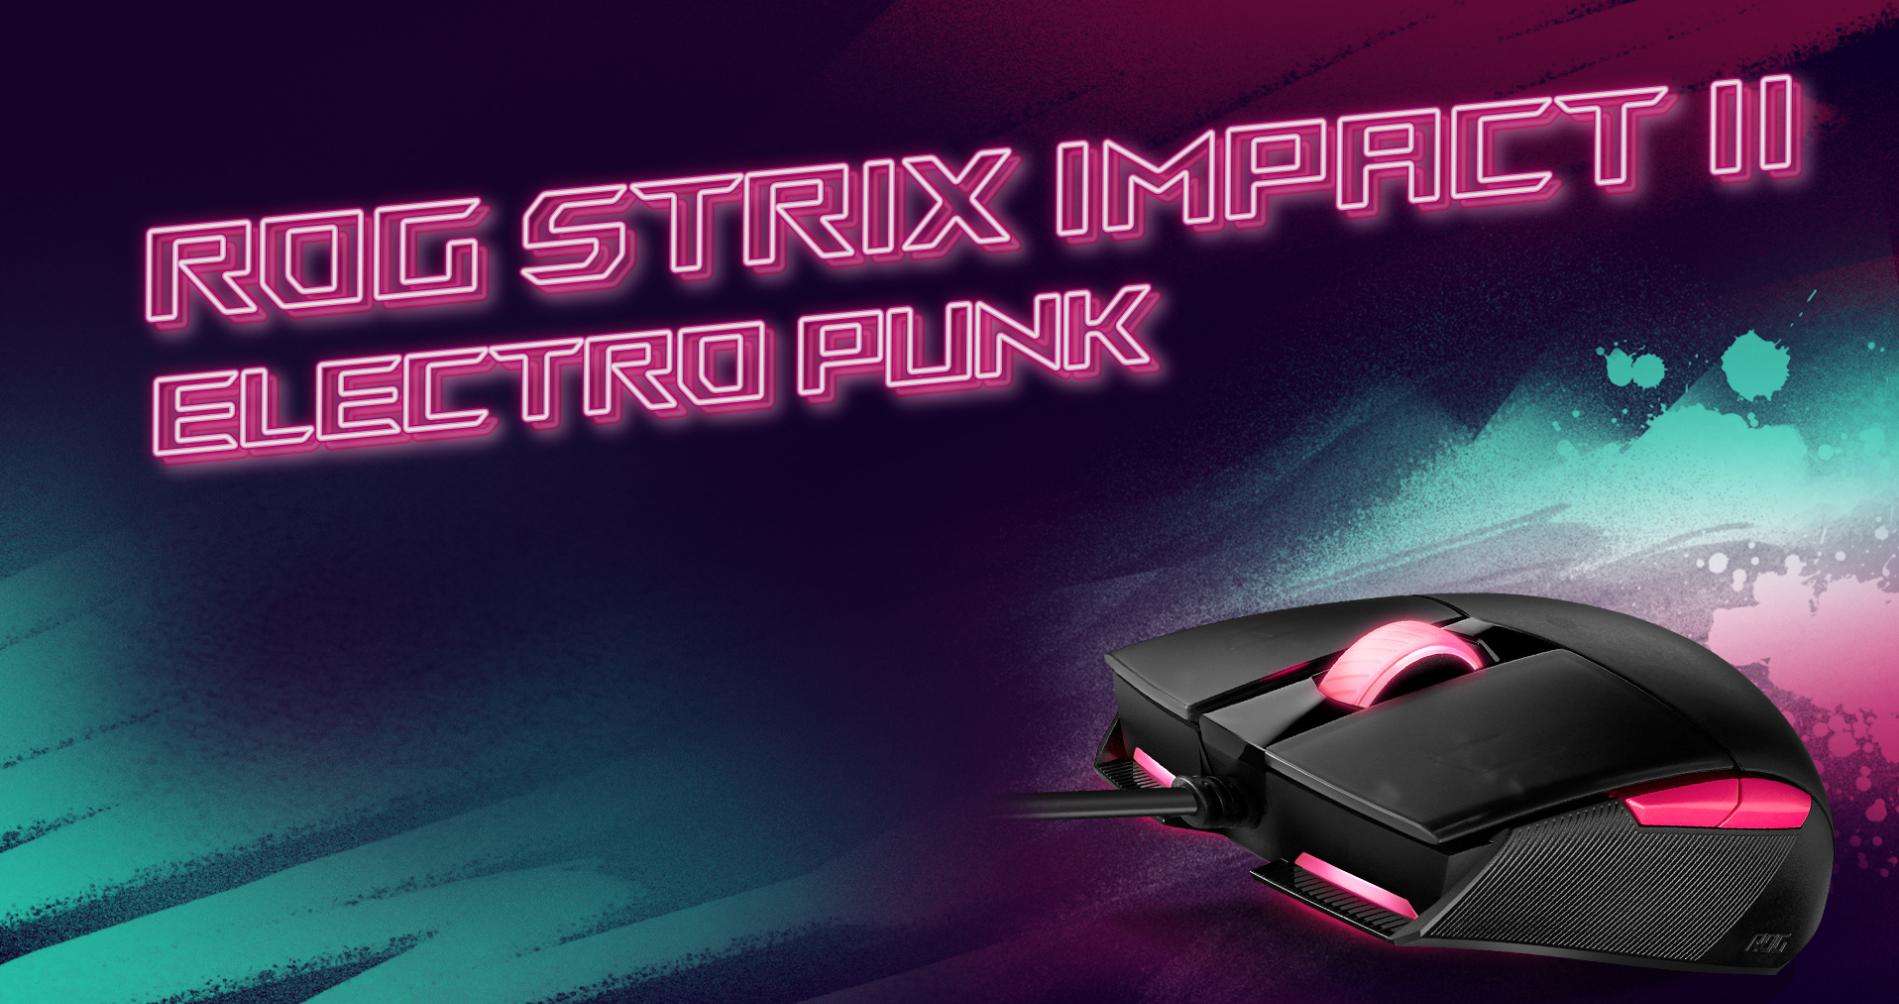 ROG Strix Impact II Electro Punk